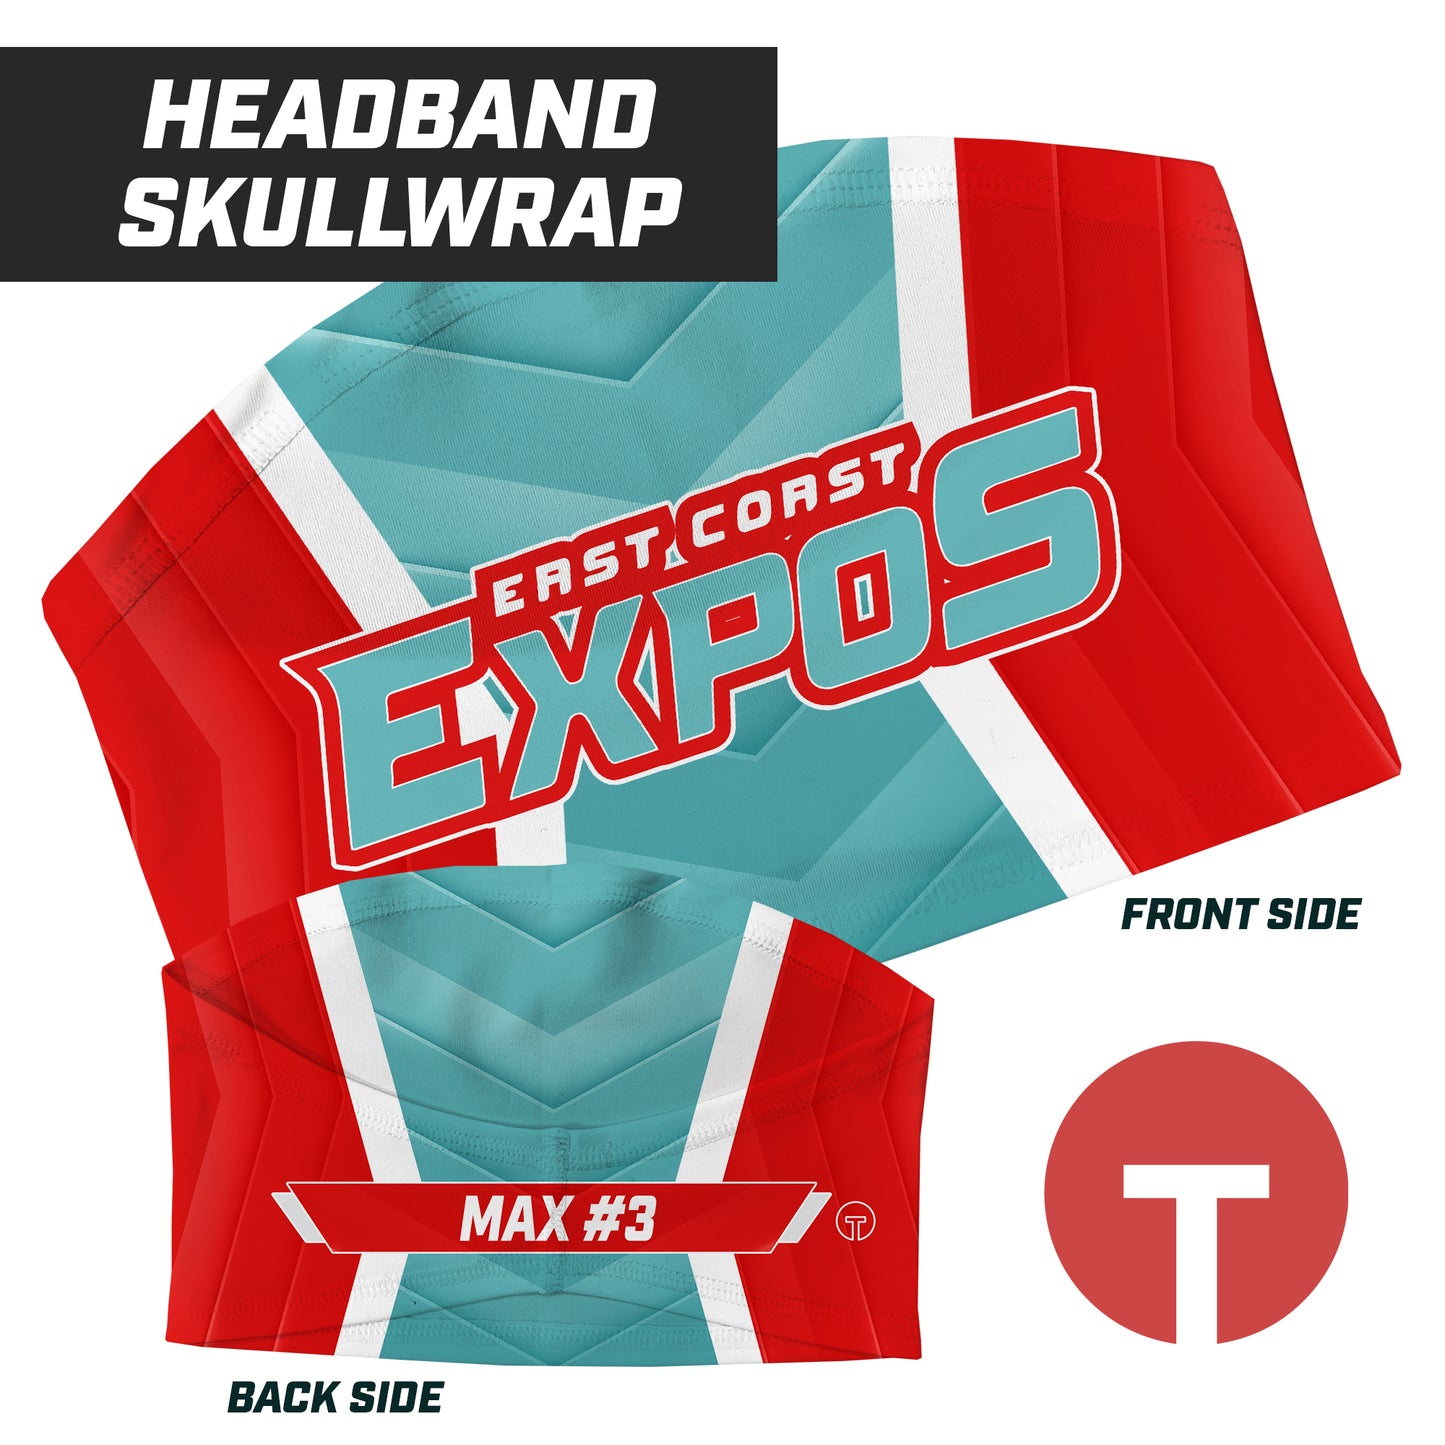 East Coast Expos - Skull Wrap Headband